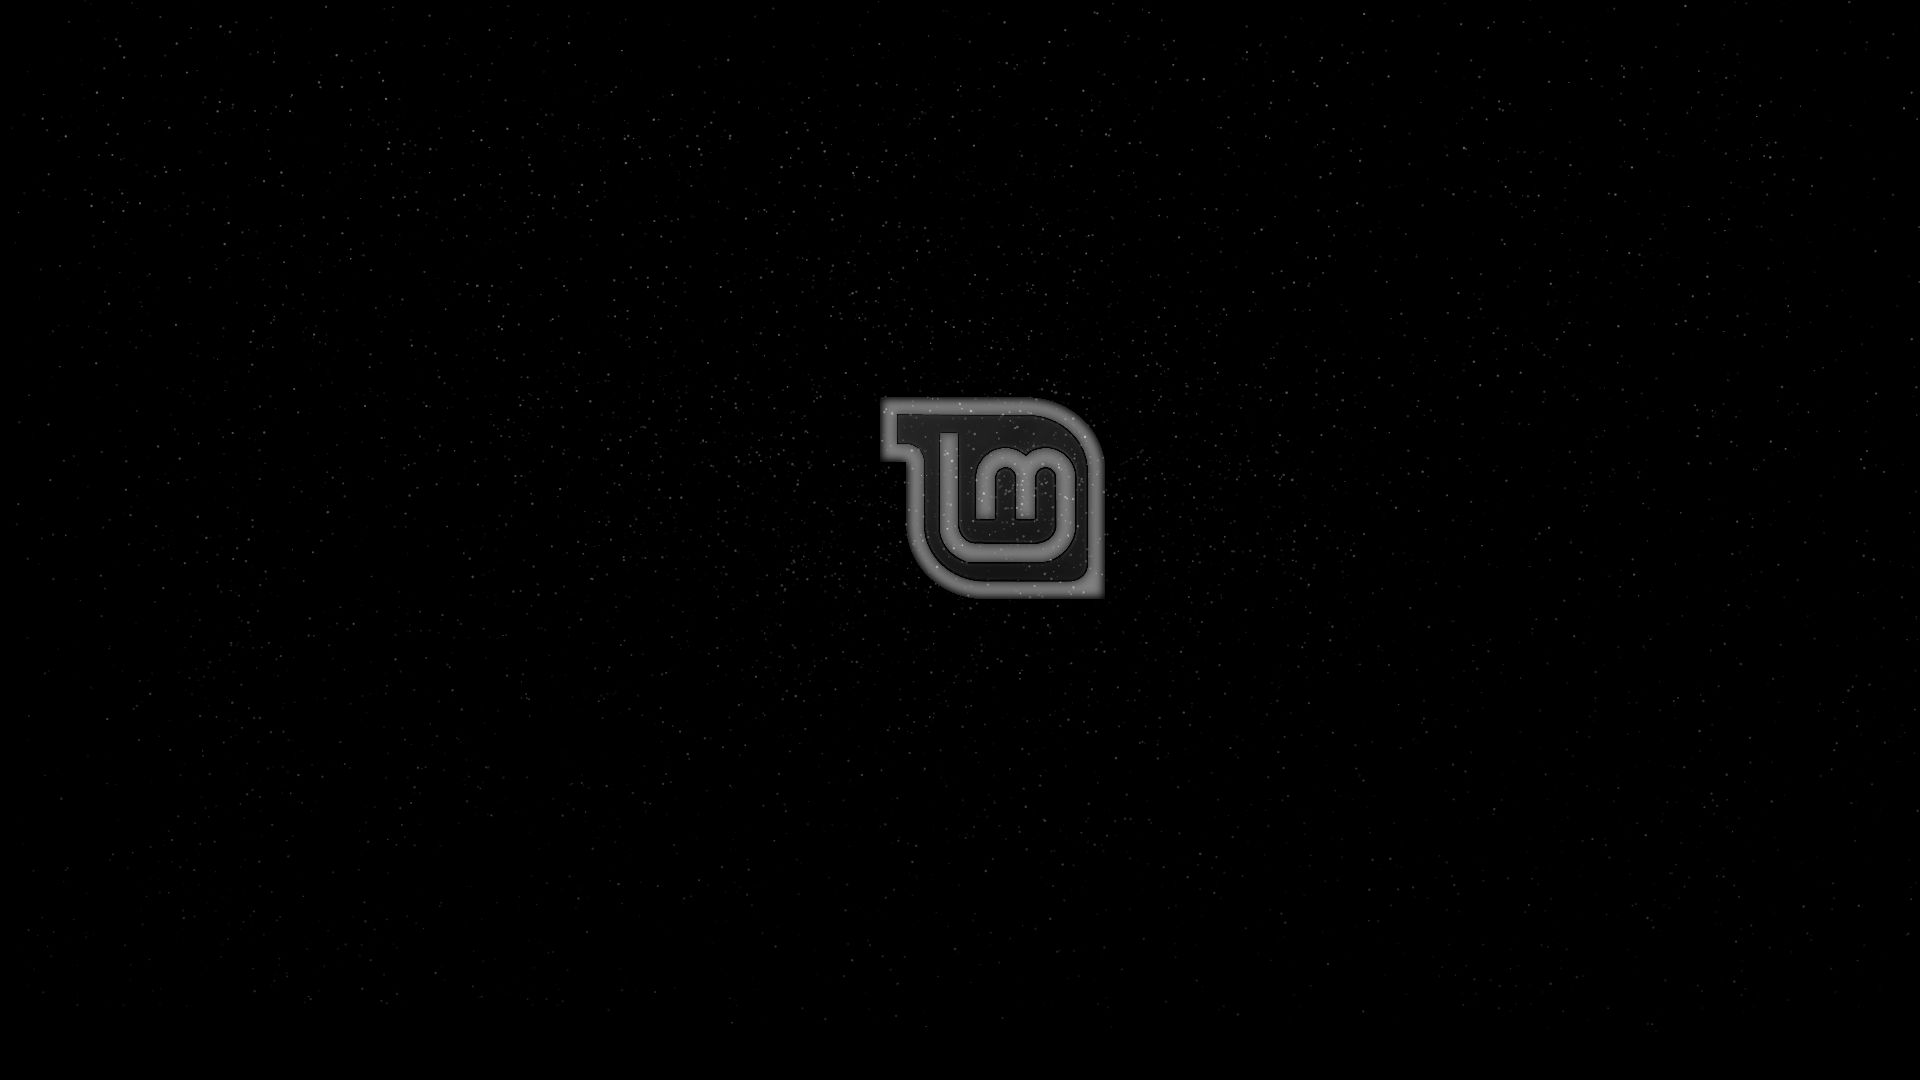 linux mint, technology, logo